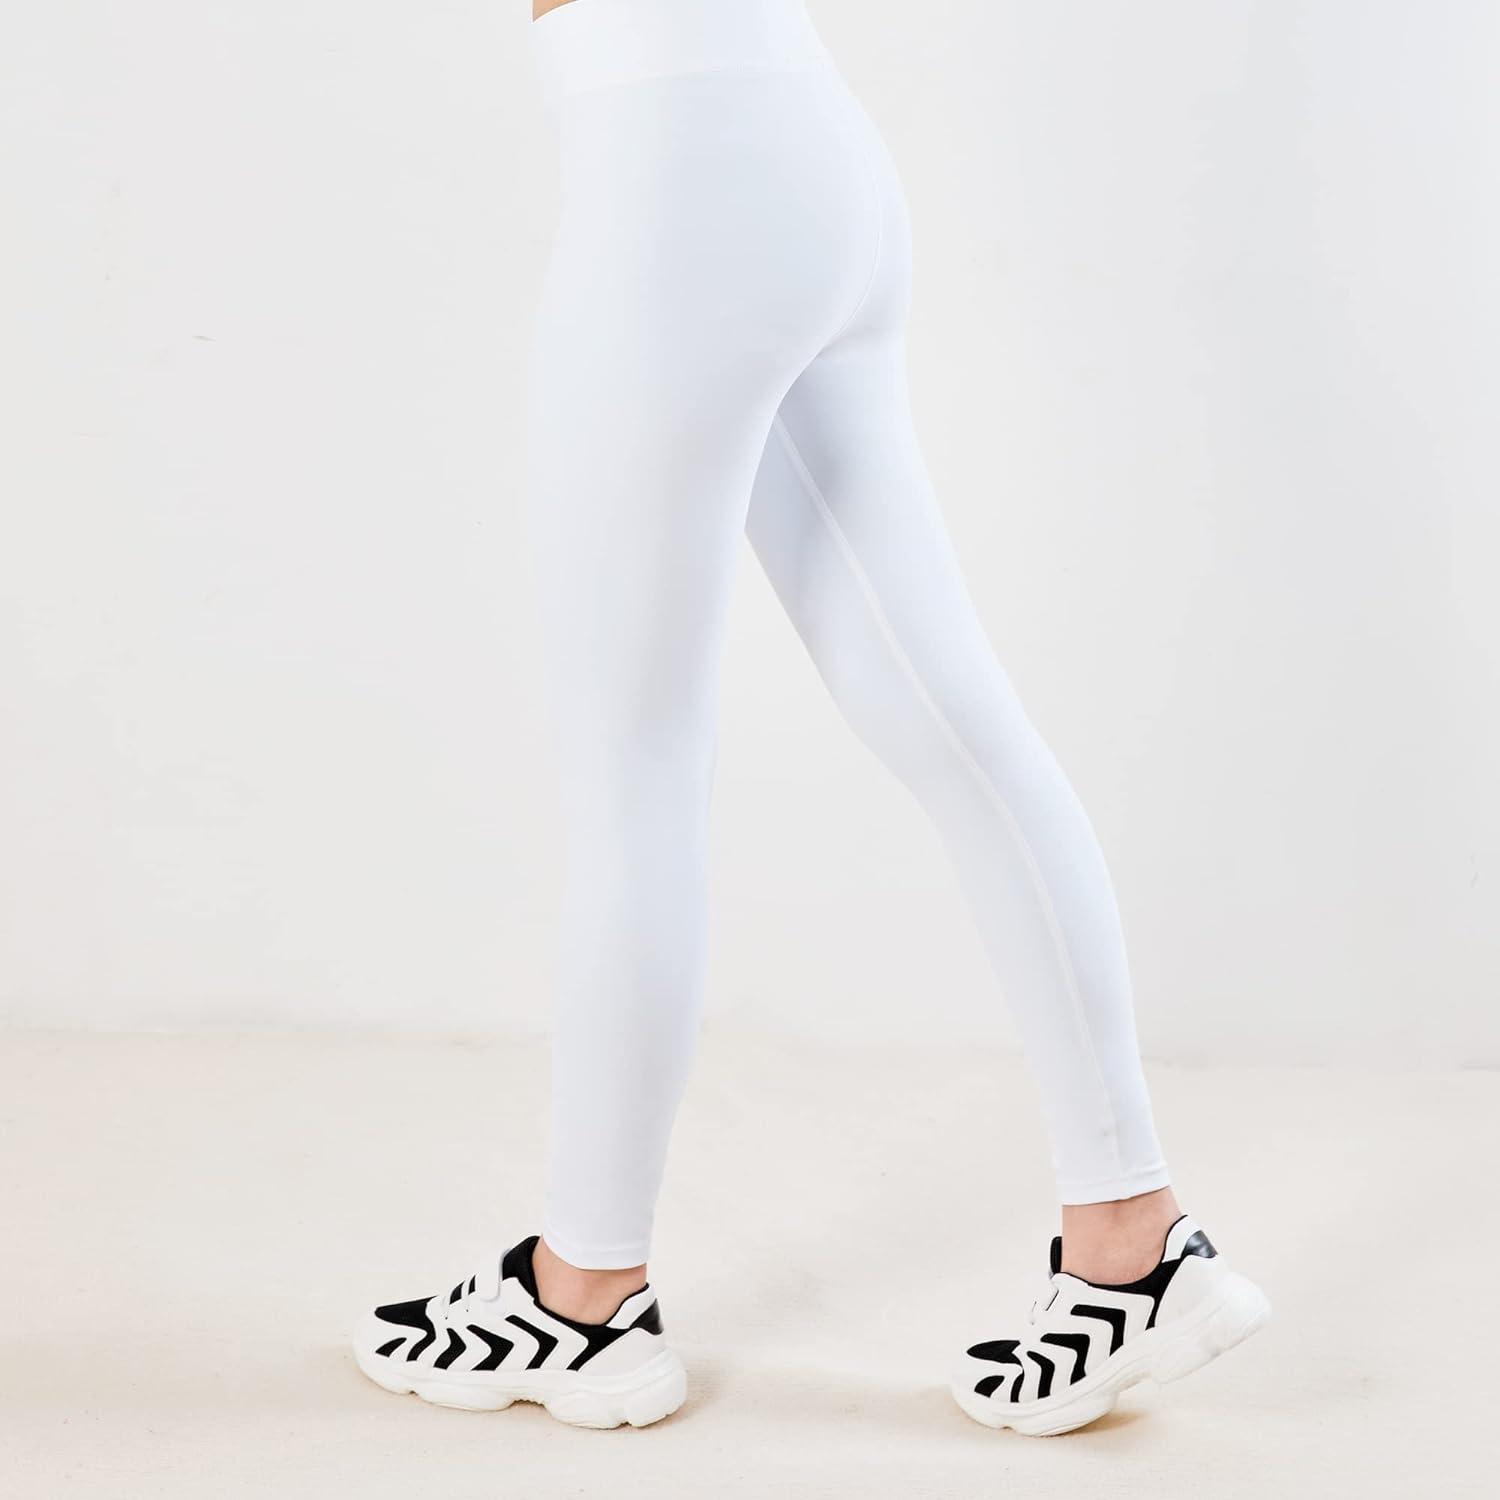 Allfenix Leggings Womens Small White Black Spots Athletic Pants High Waist  Gym | eBay